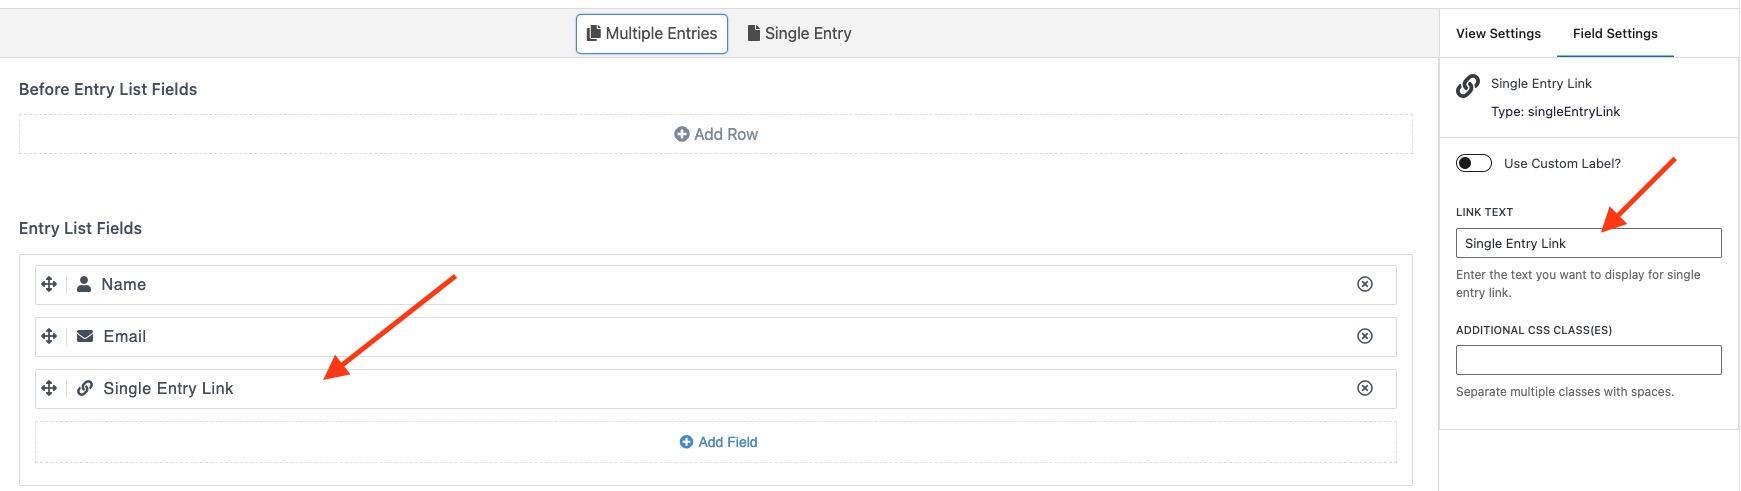 wpforms views single entry link field settings